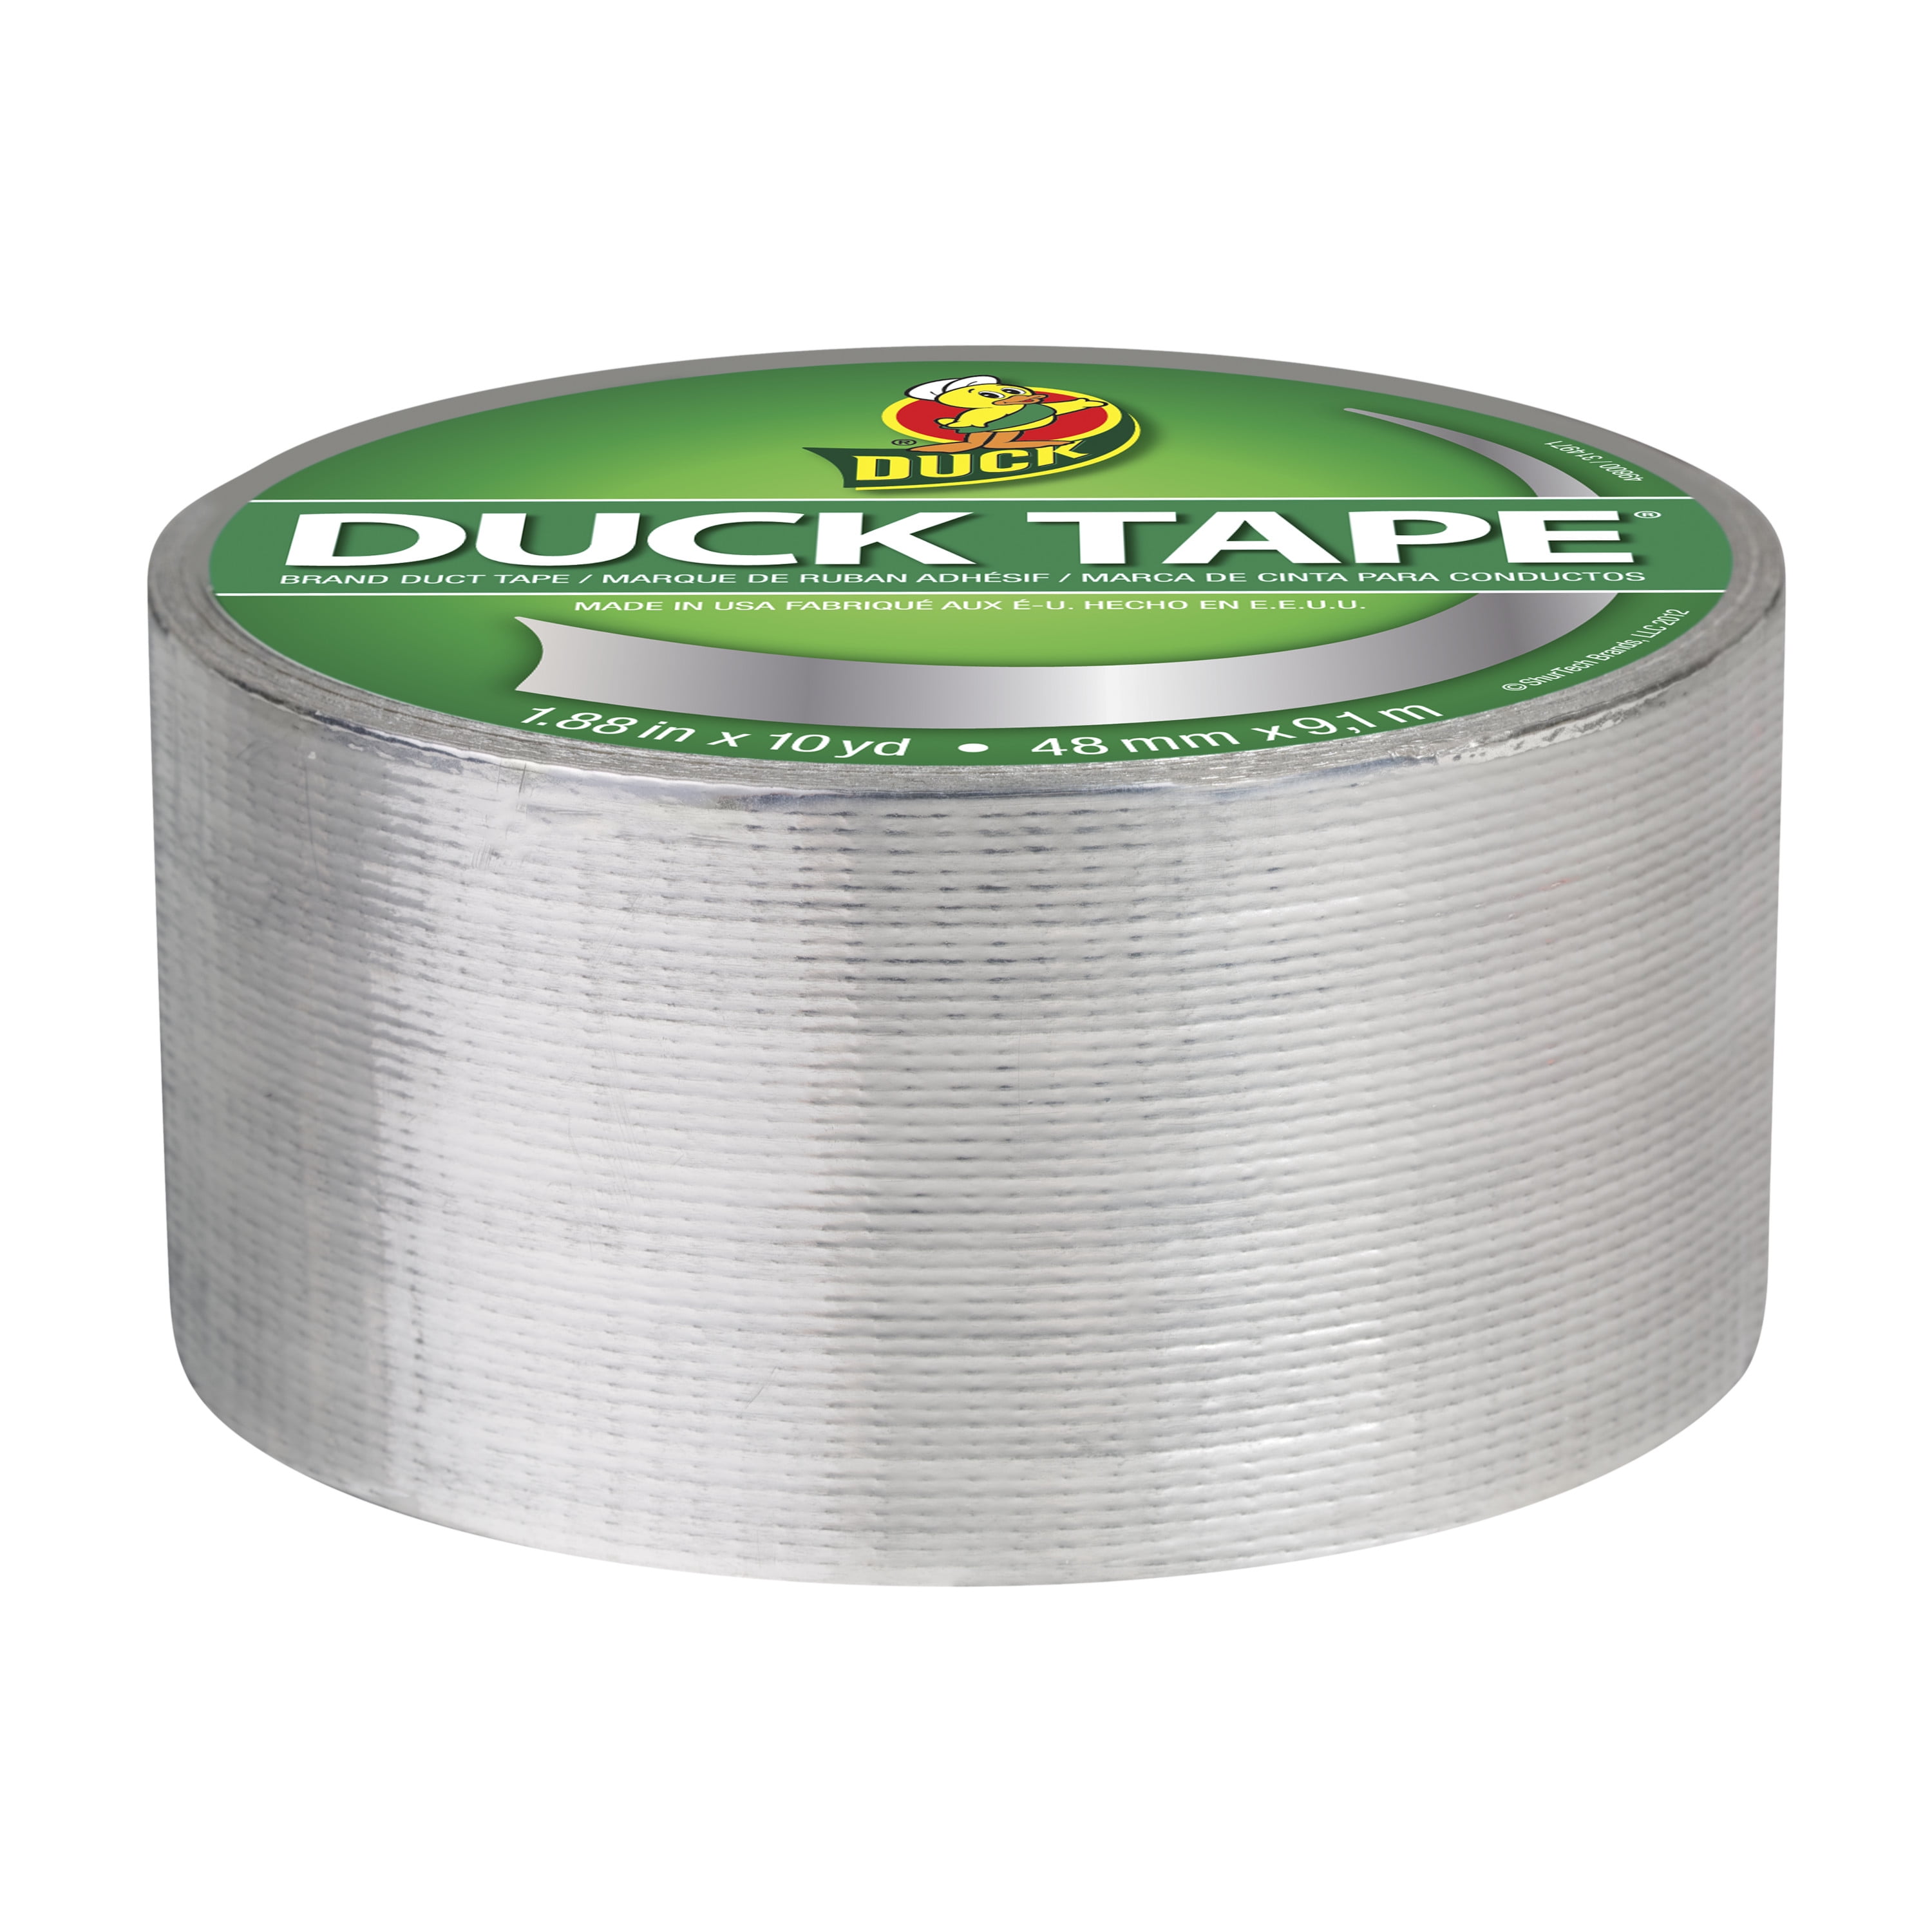 AMOGATO Colored Duct Tape - 1 Inch x 10 Yards per Rolls,Multi